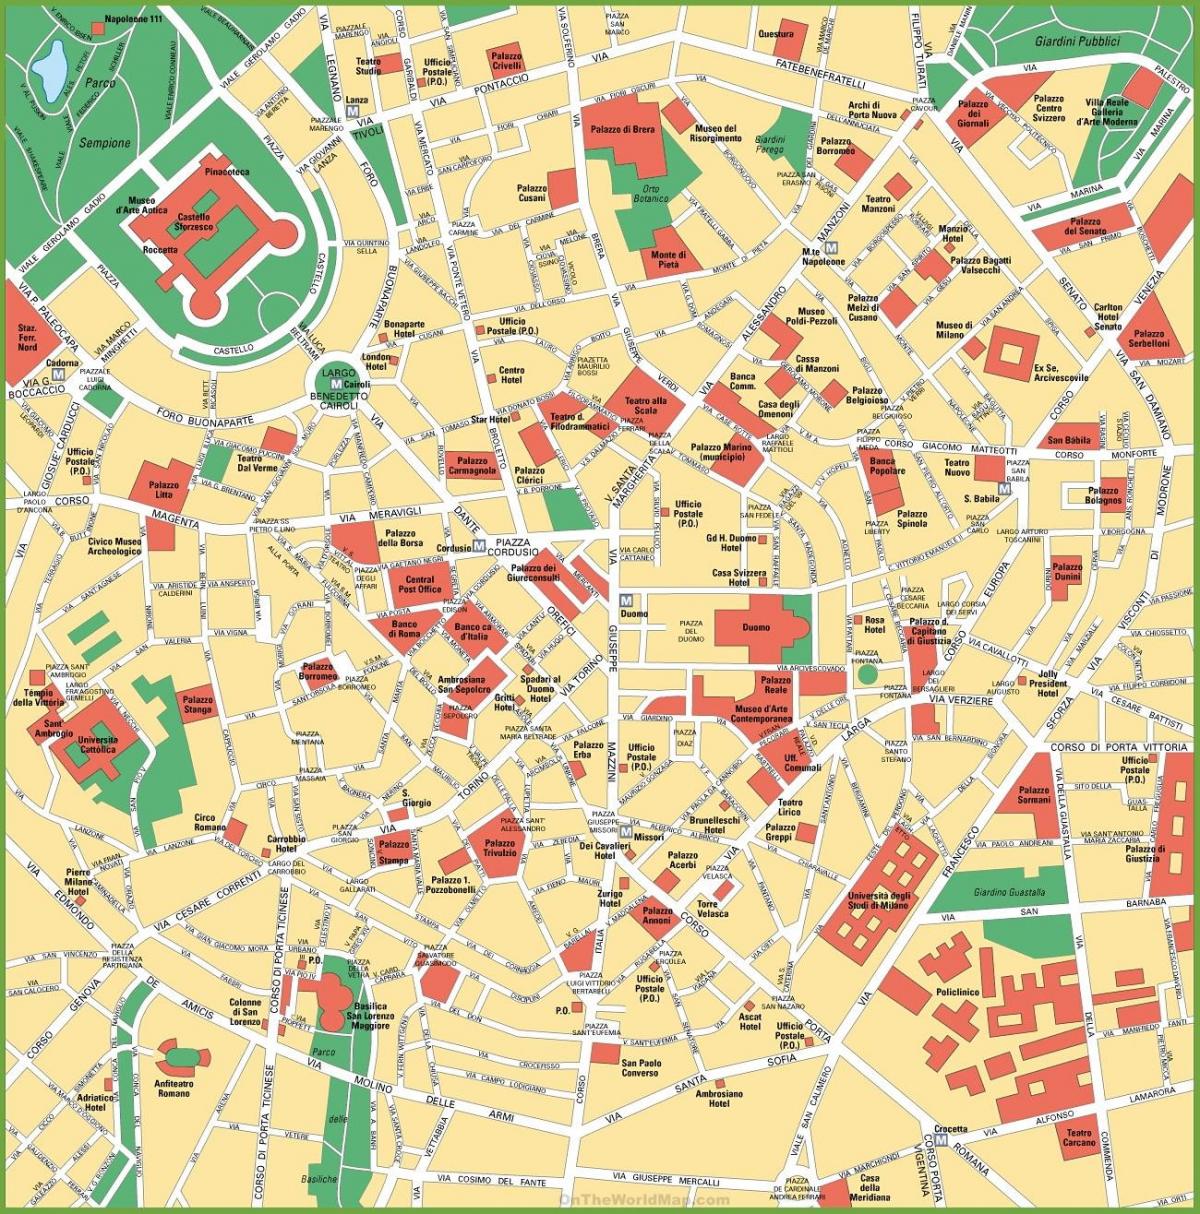 milano city-kart